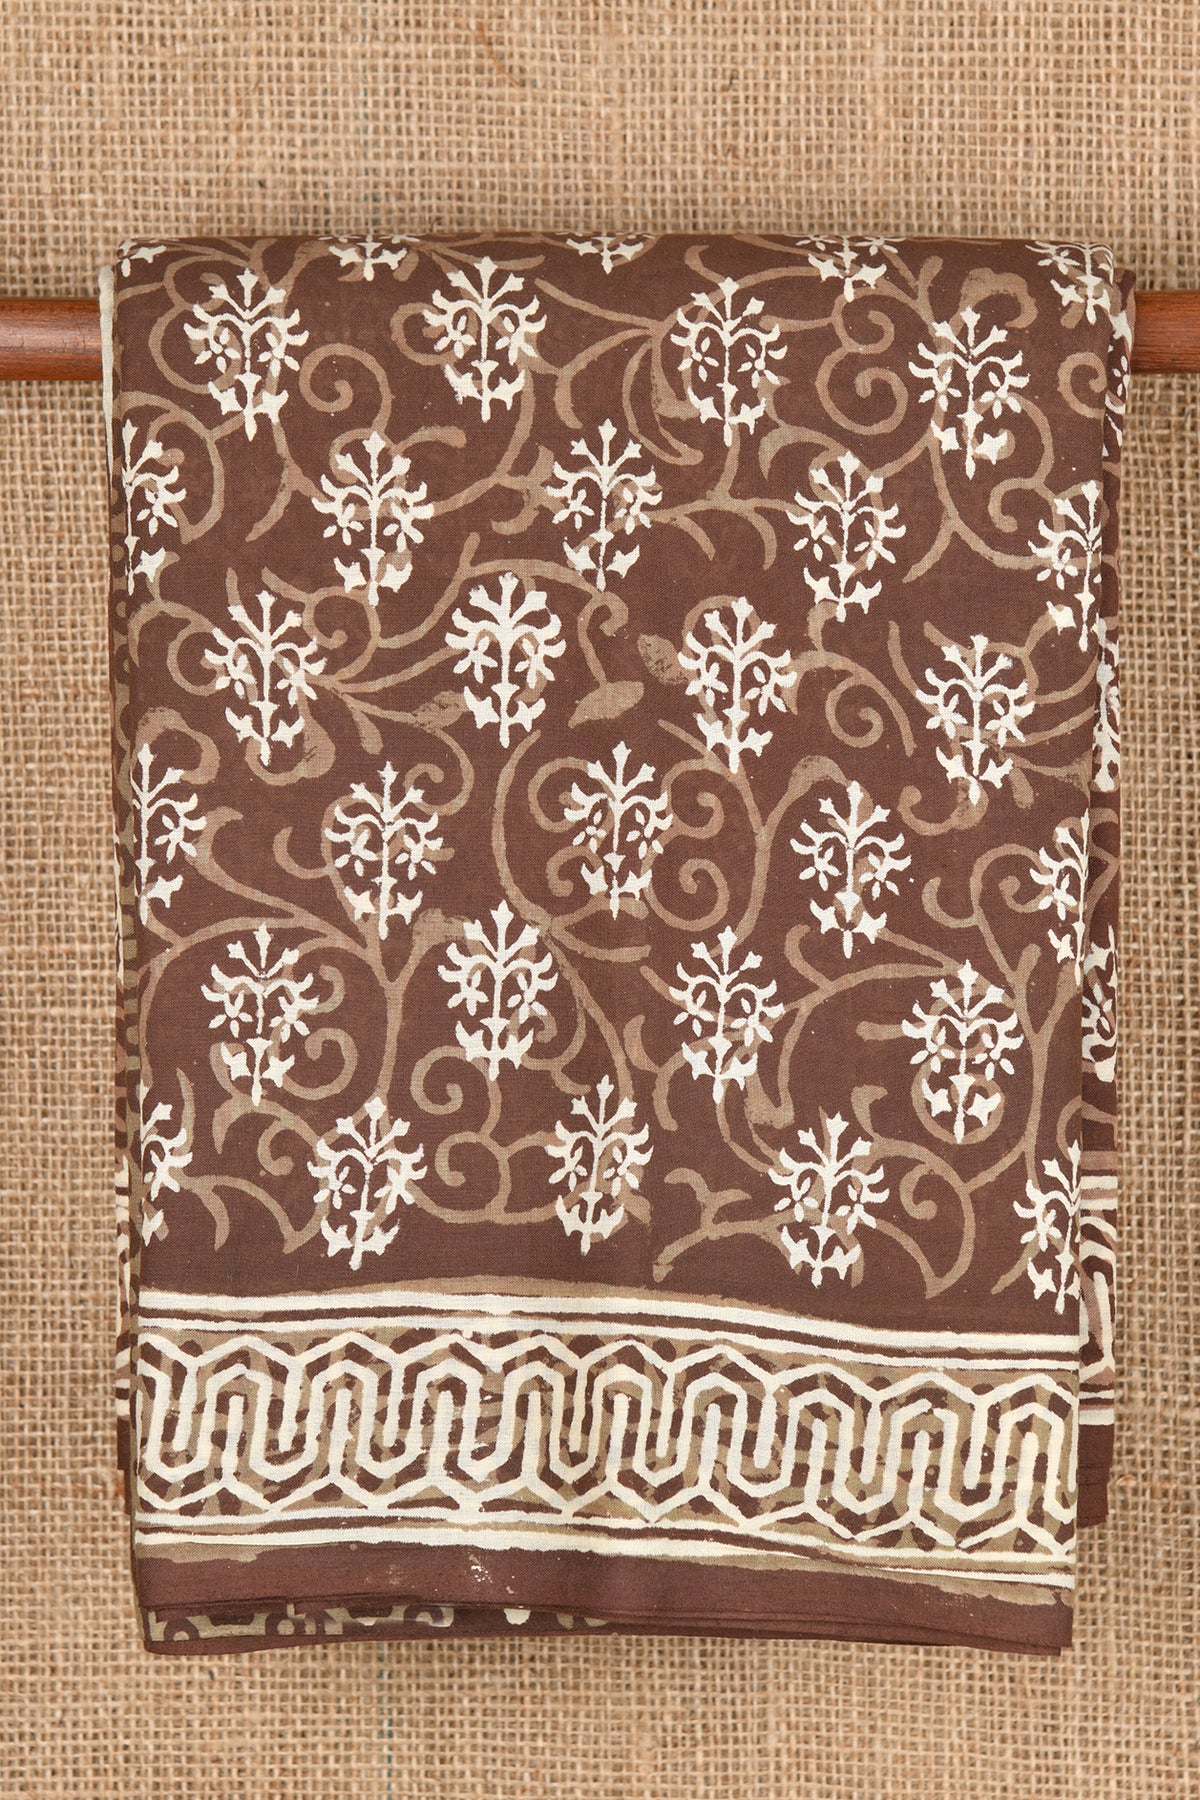 Walnut Brown Floral Motif Jaipur Cotton Saree